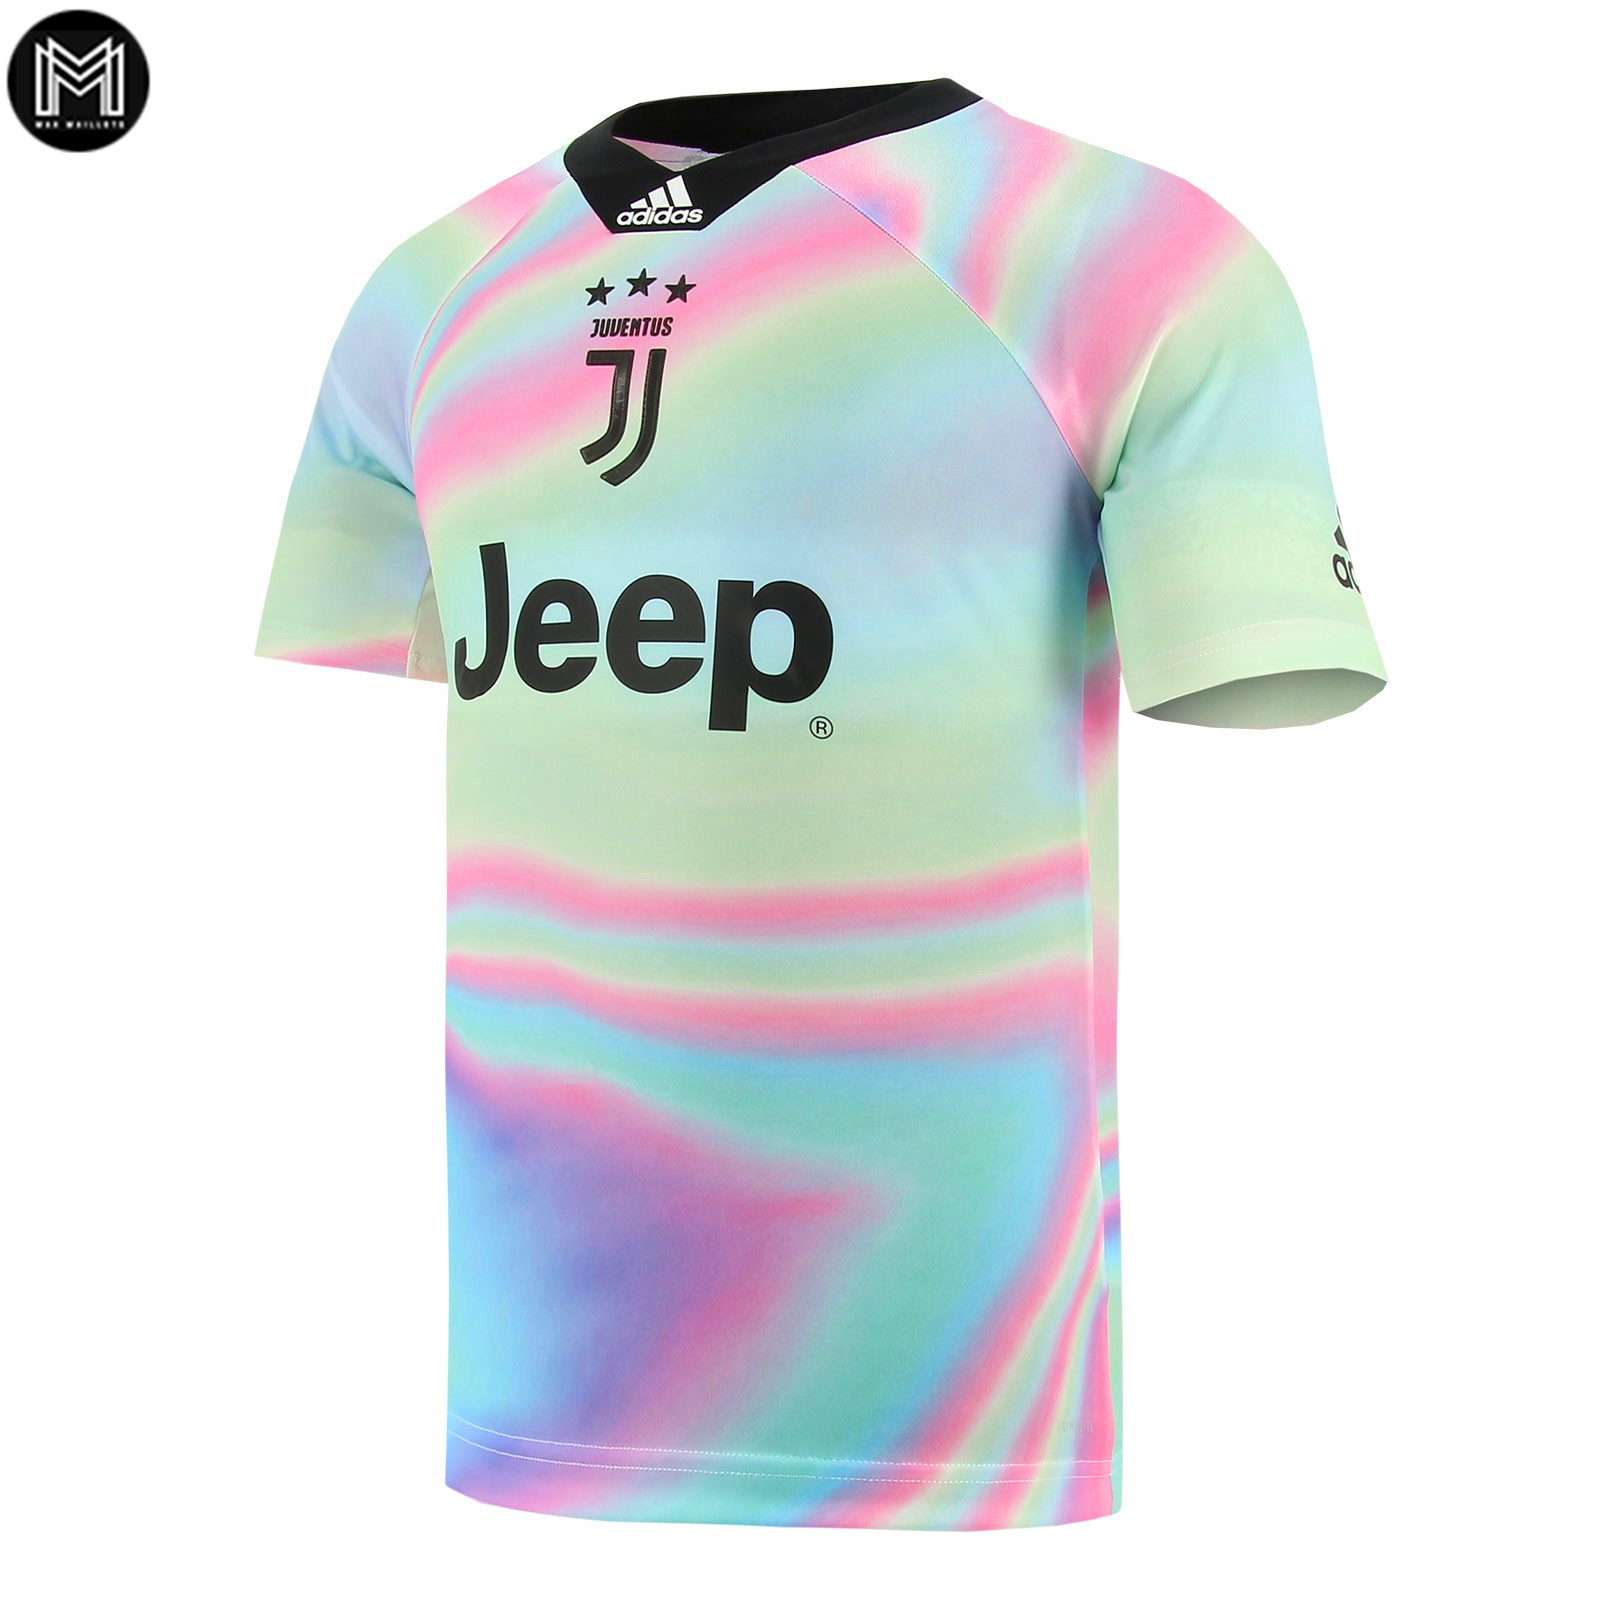 Juventus Ea Sports X Adidas Fifa 19